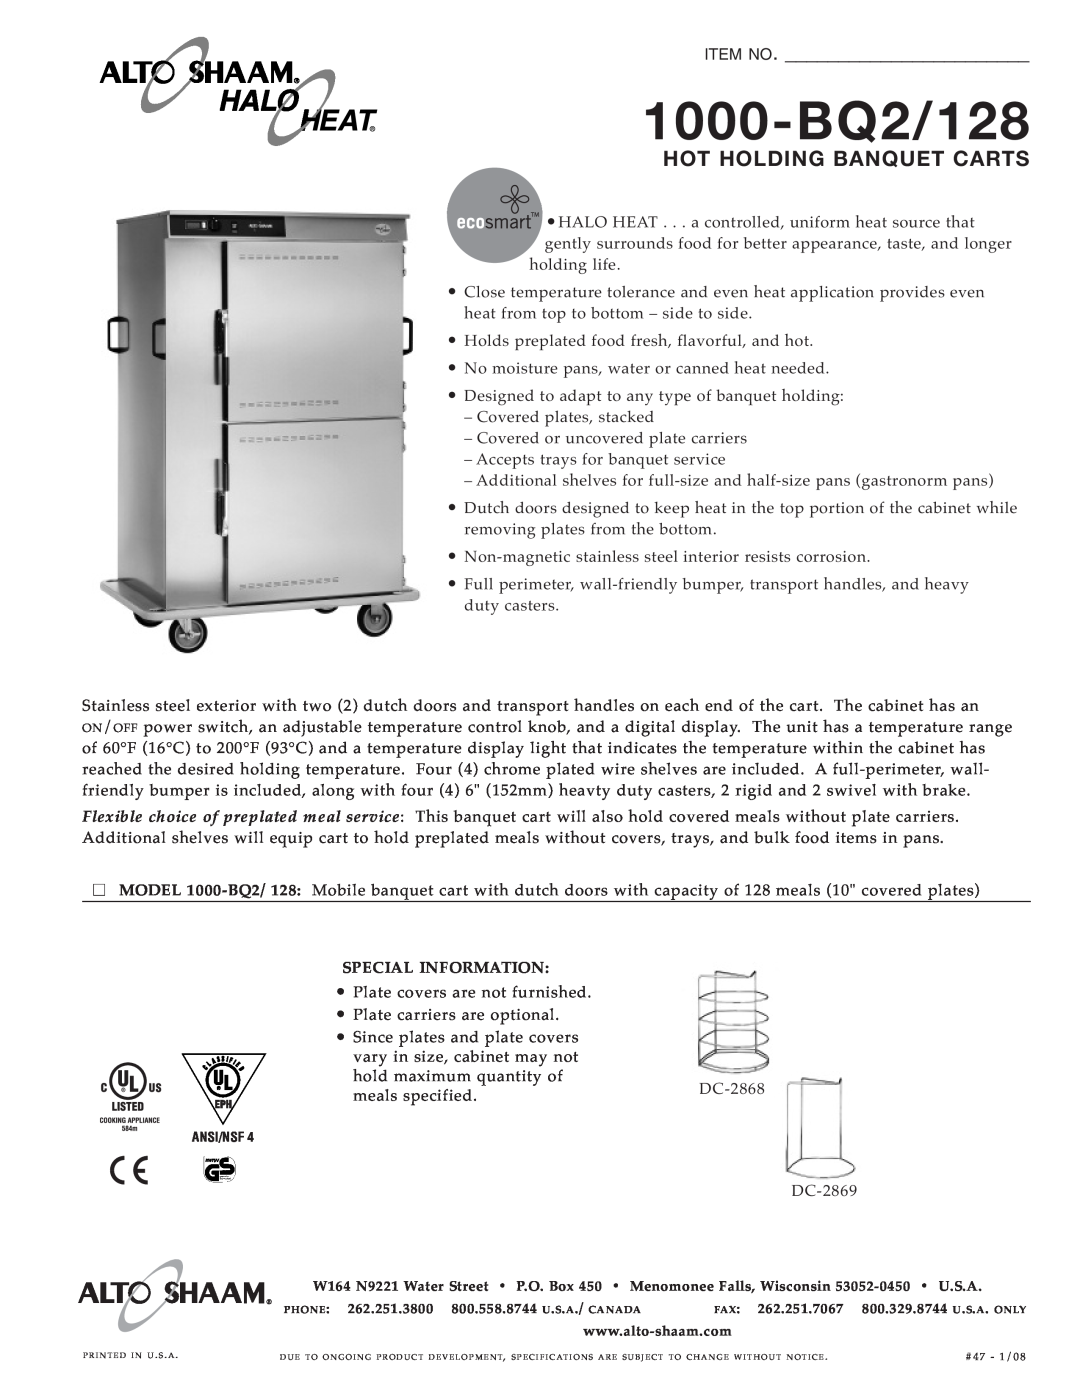 Alto-Shaam 1000-BQ2/128 specifications Hot Holding Banquet Carts, Item No 